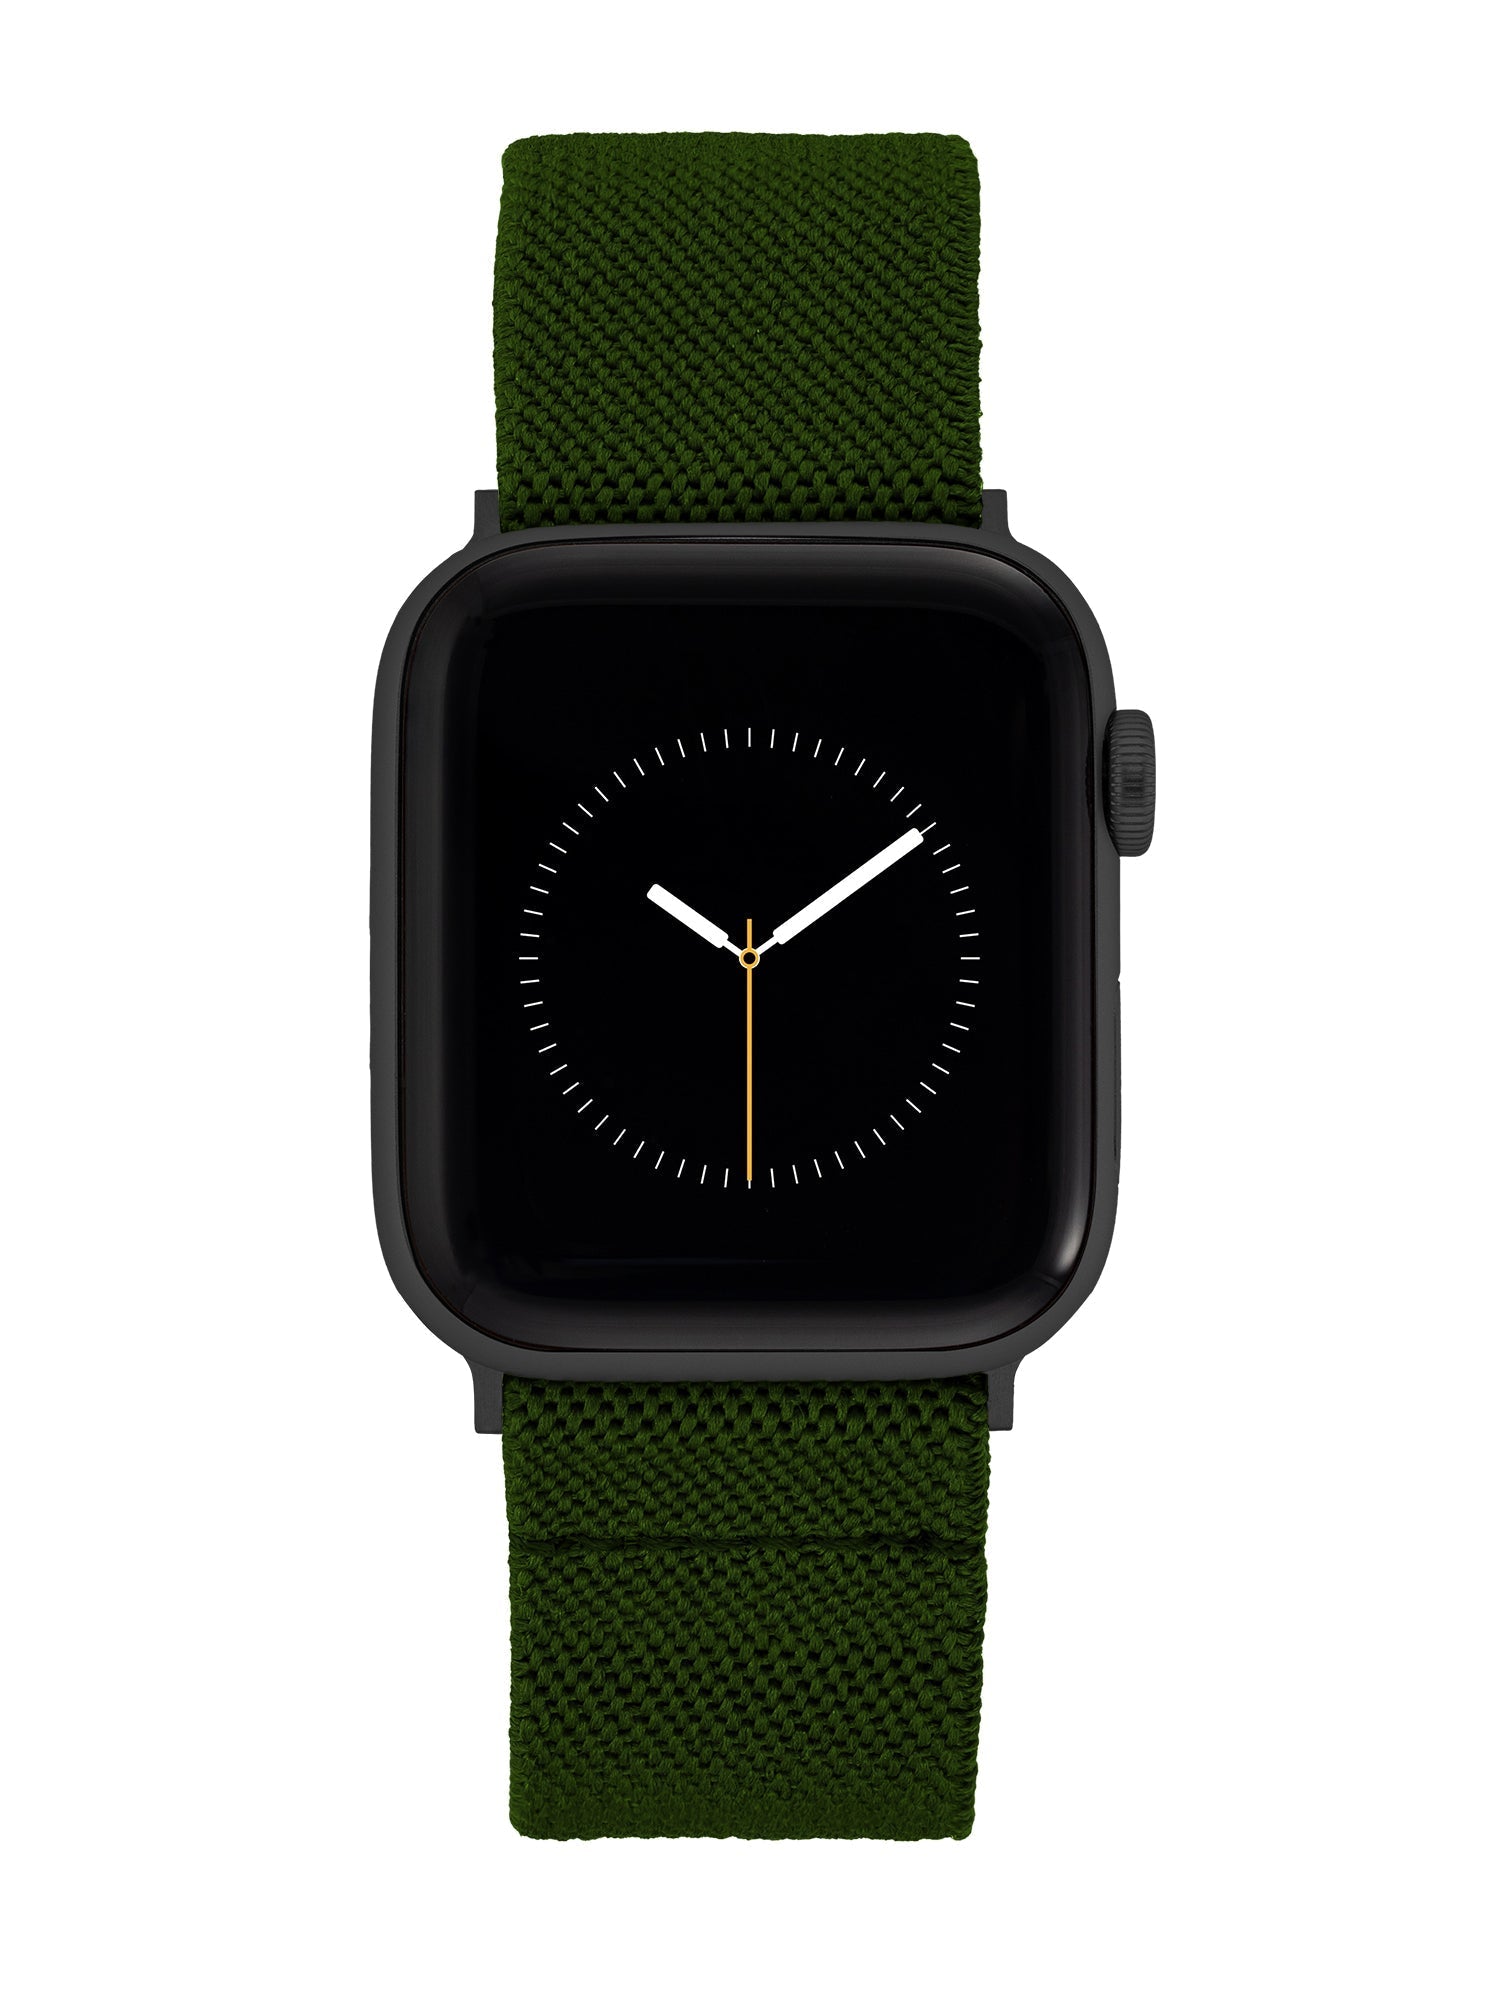 Elastic Nylon Band for Apple Watch®